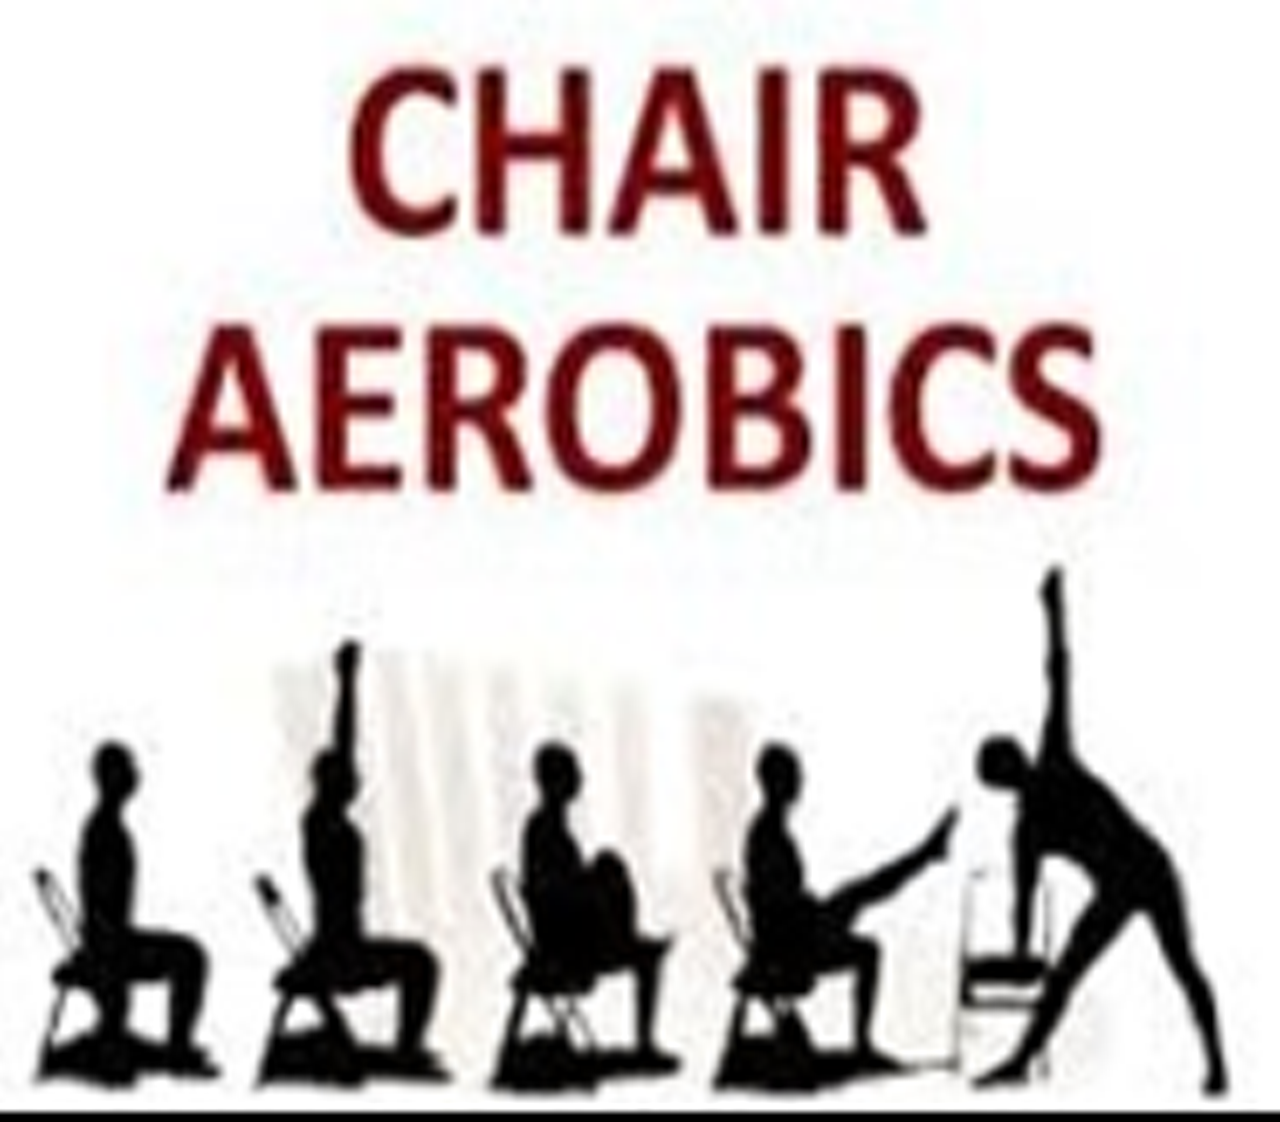 Chair aerobics for seniors, Athens Christian Church, Health & Fitness